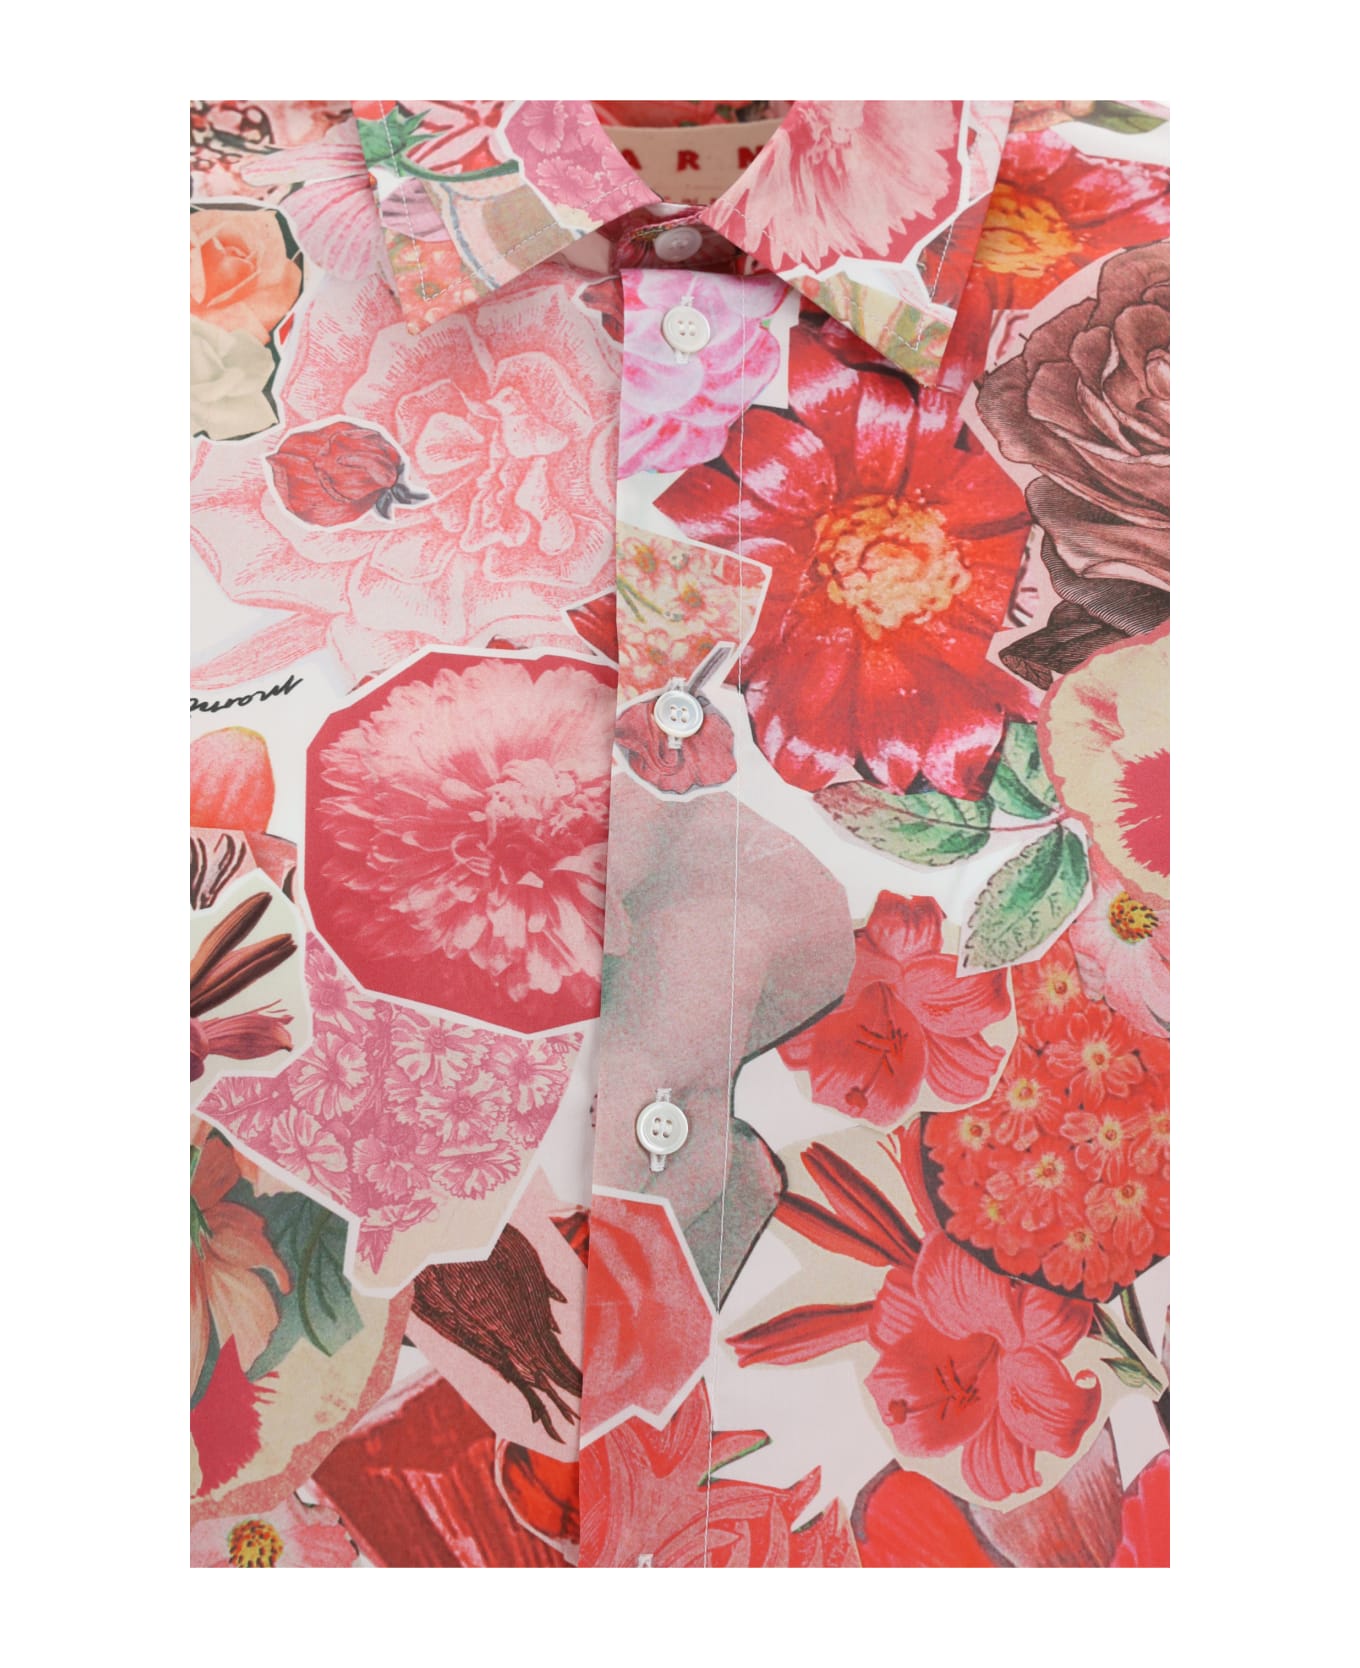 Marni Pink Sleeveless Shirt With Flower Requiem Print - Pink Clematis シャツ